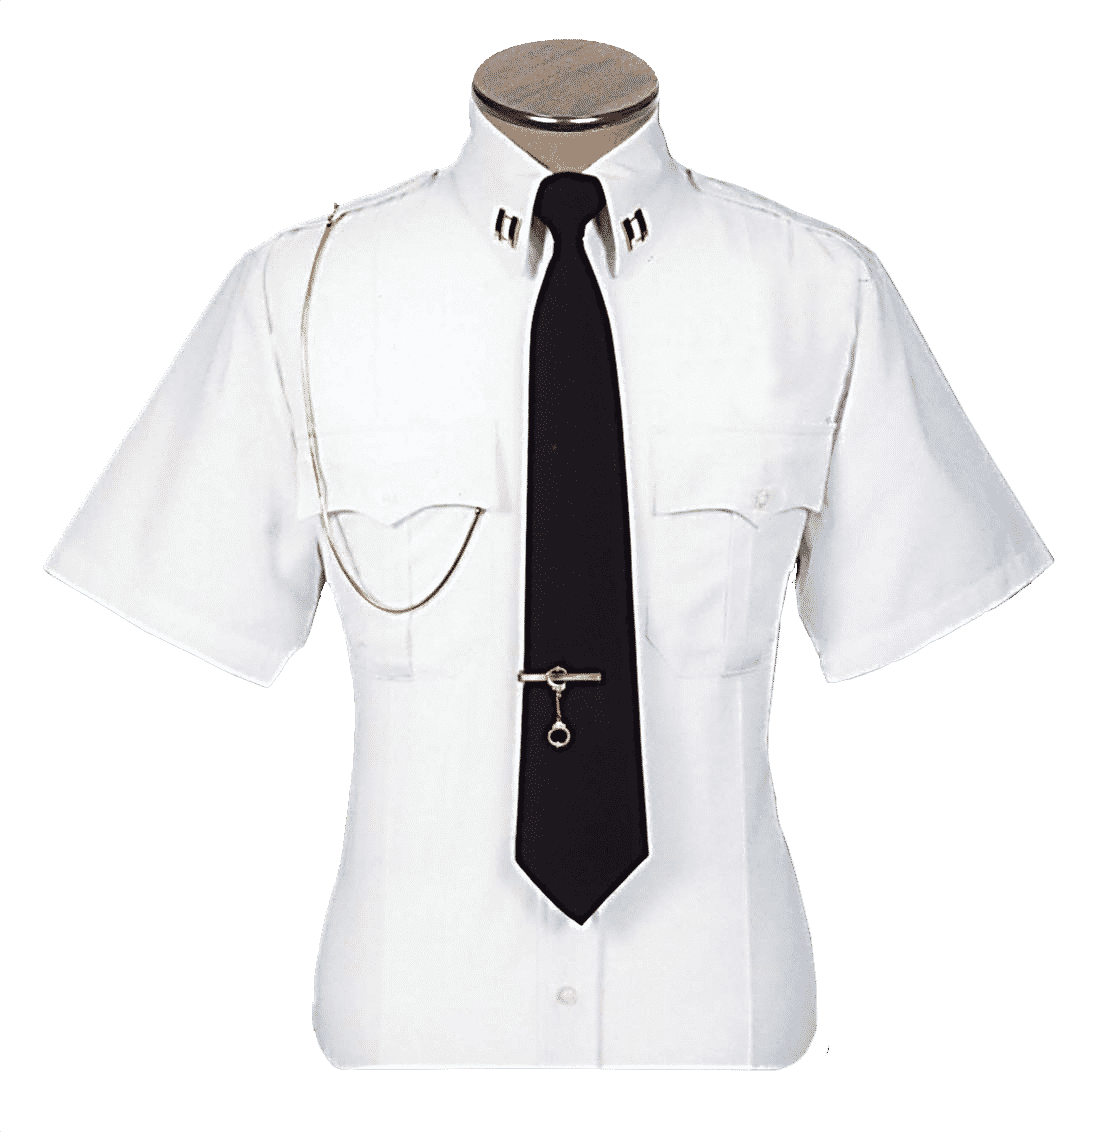 First Class Poly-Cotton Short-Sleeve Uniform Shirt - Clothing & Accessories